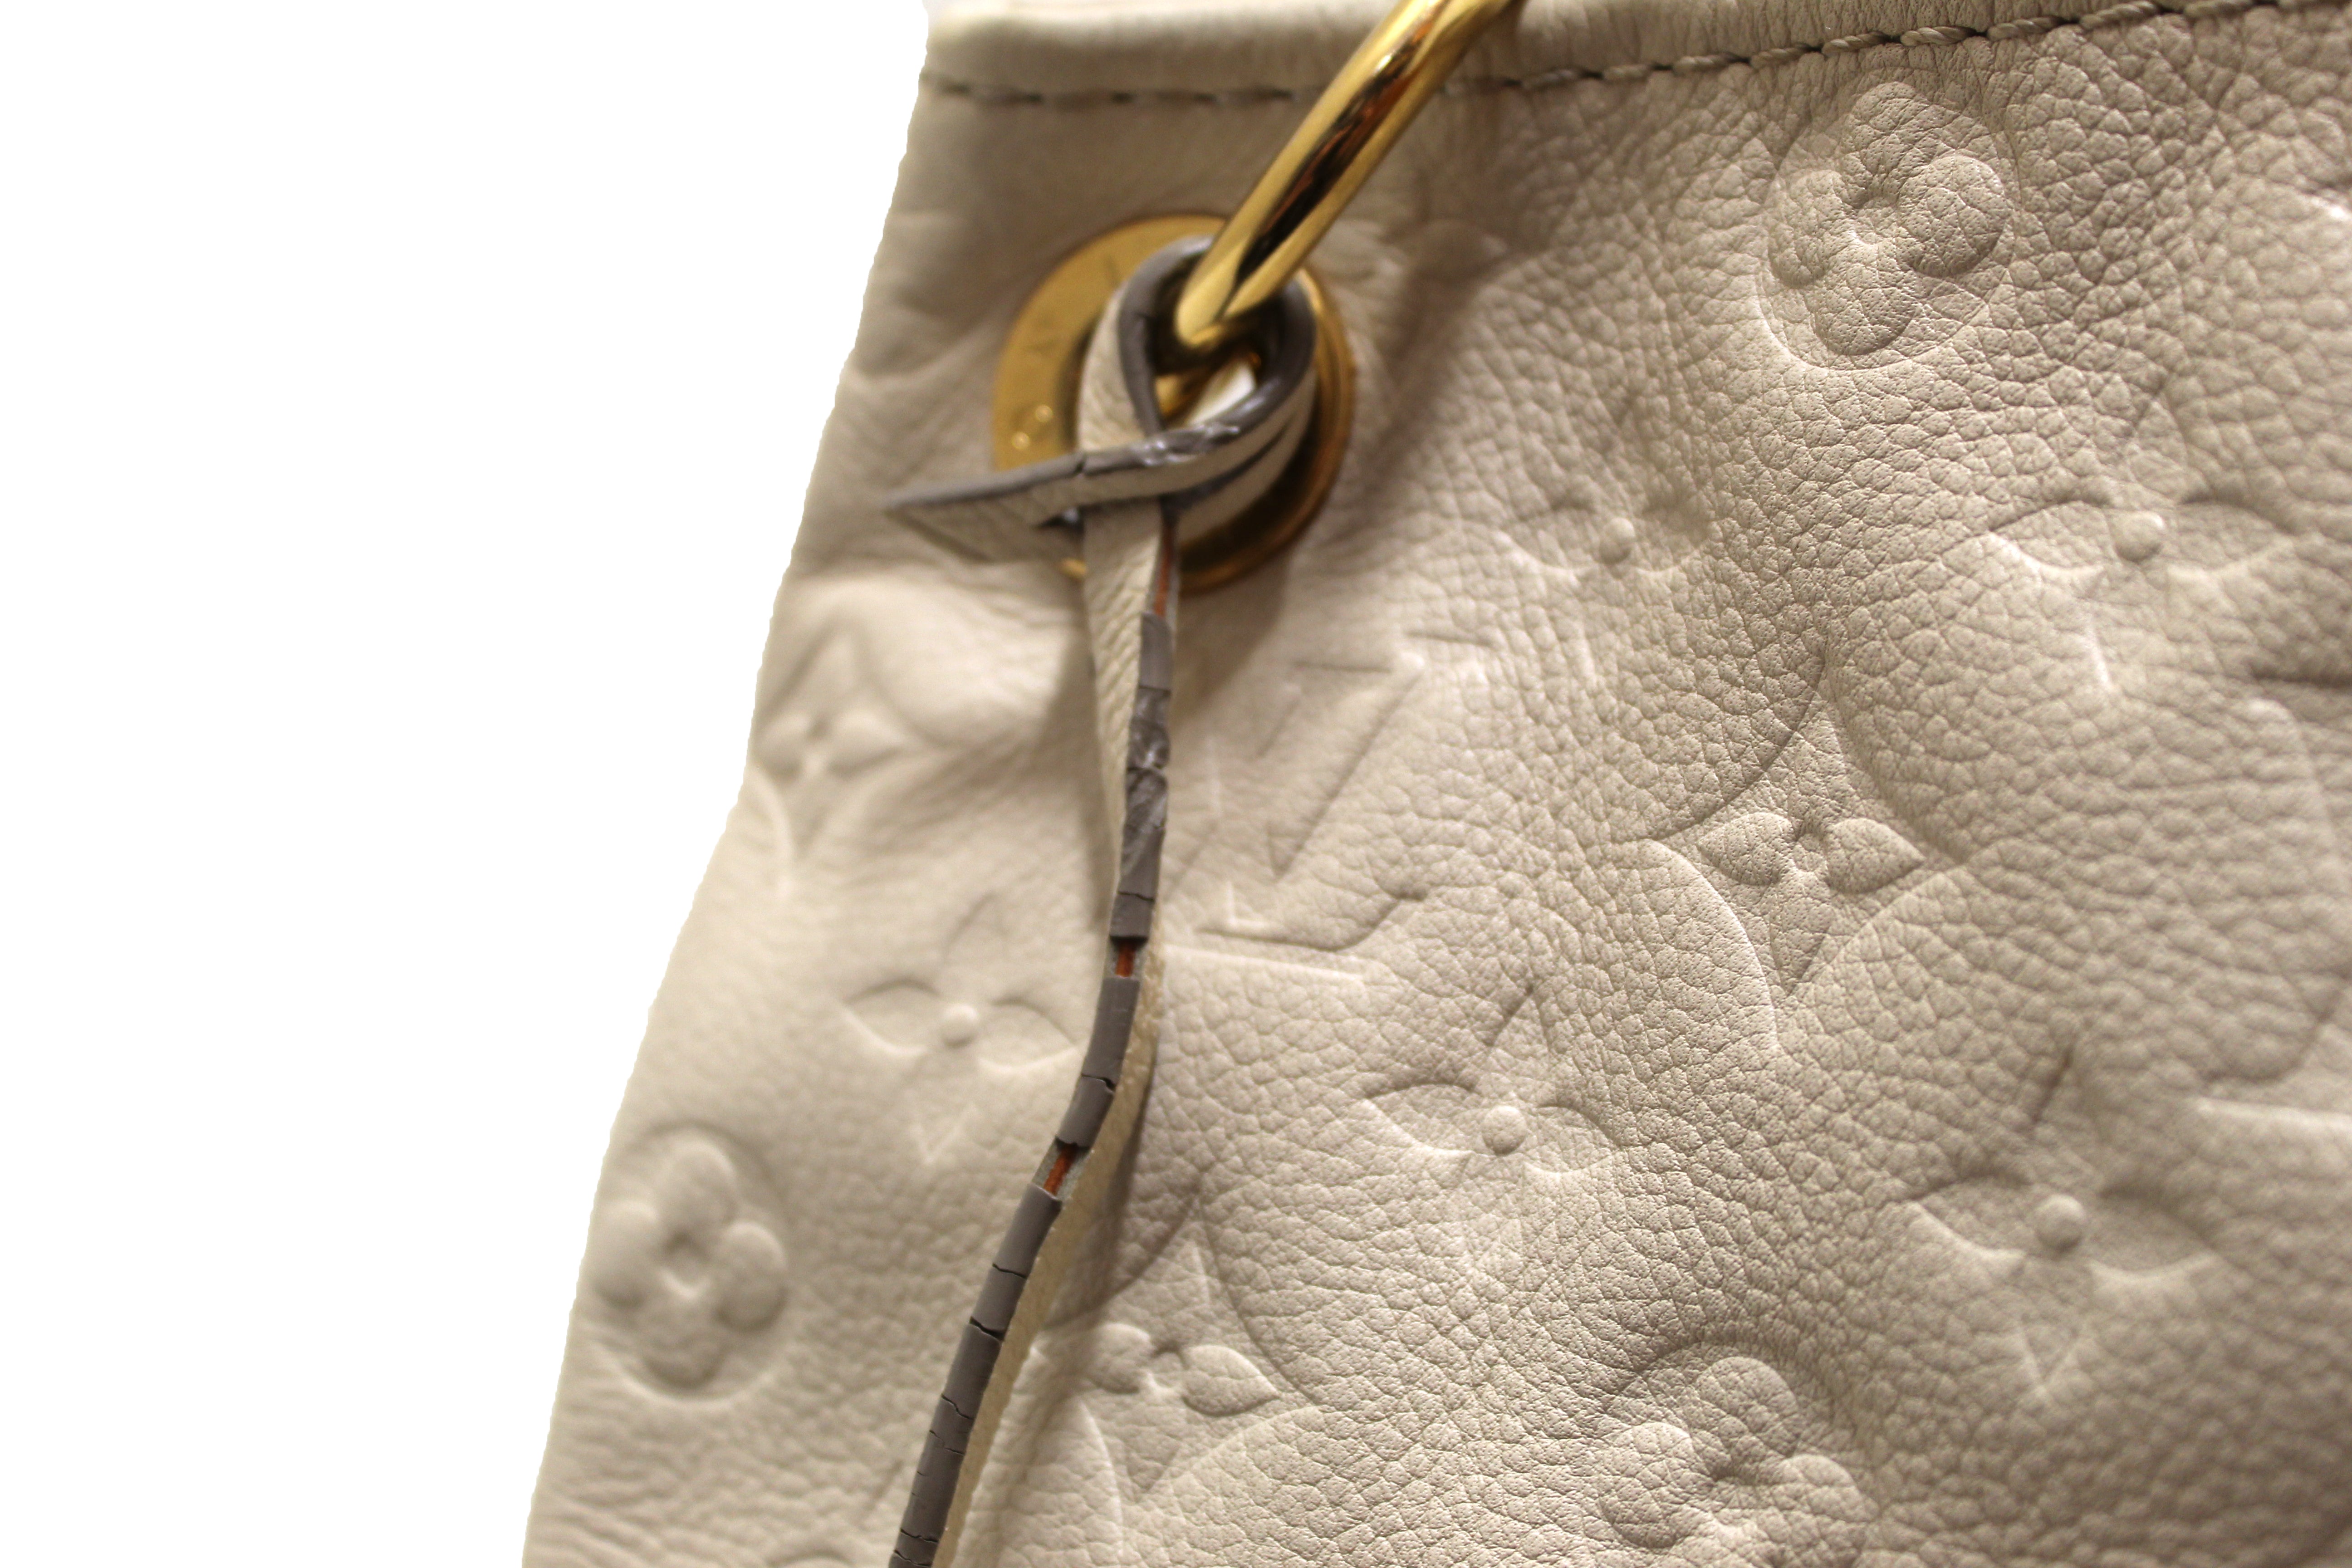 Leather handbag Louis Vuitton Beige in Leather - 32571430